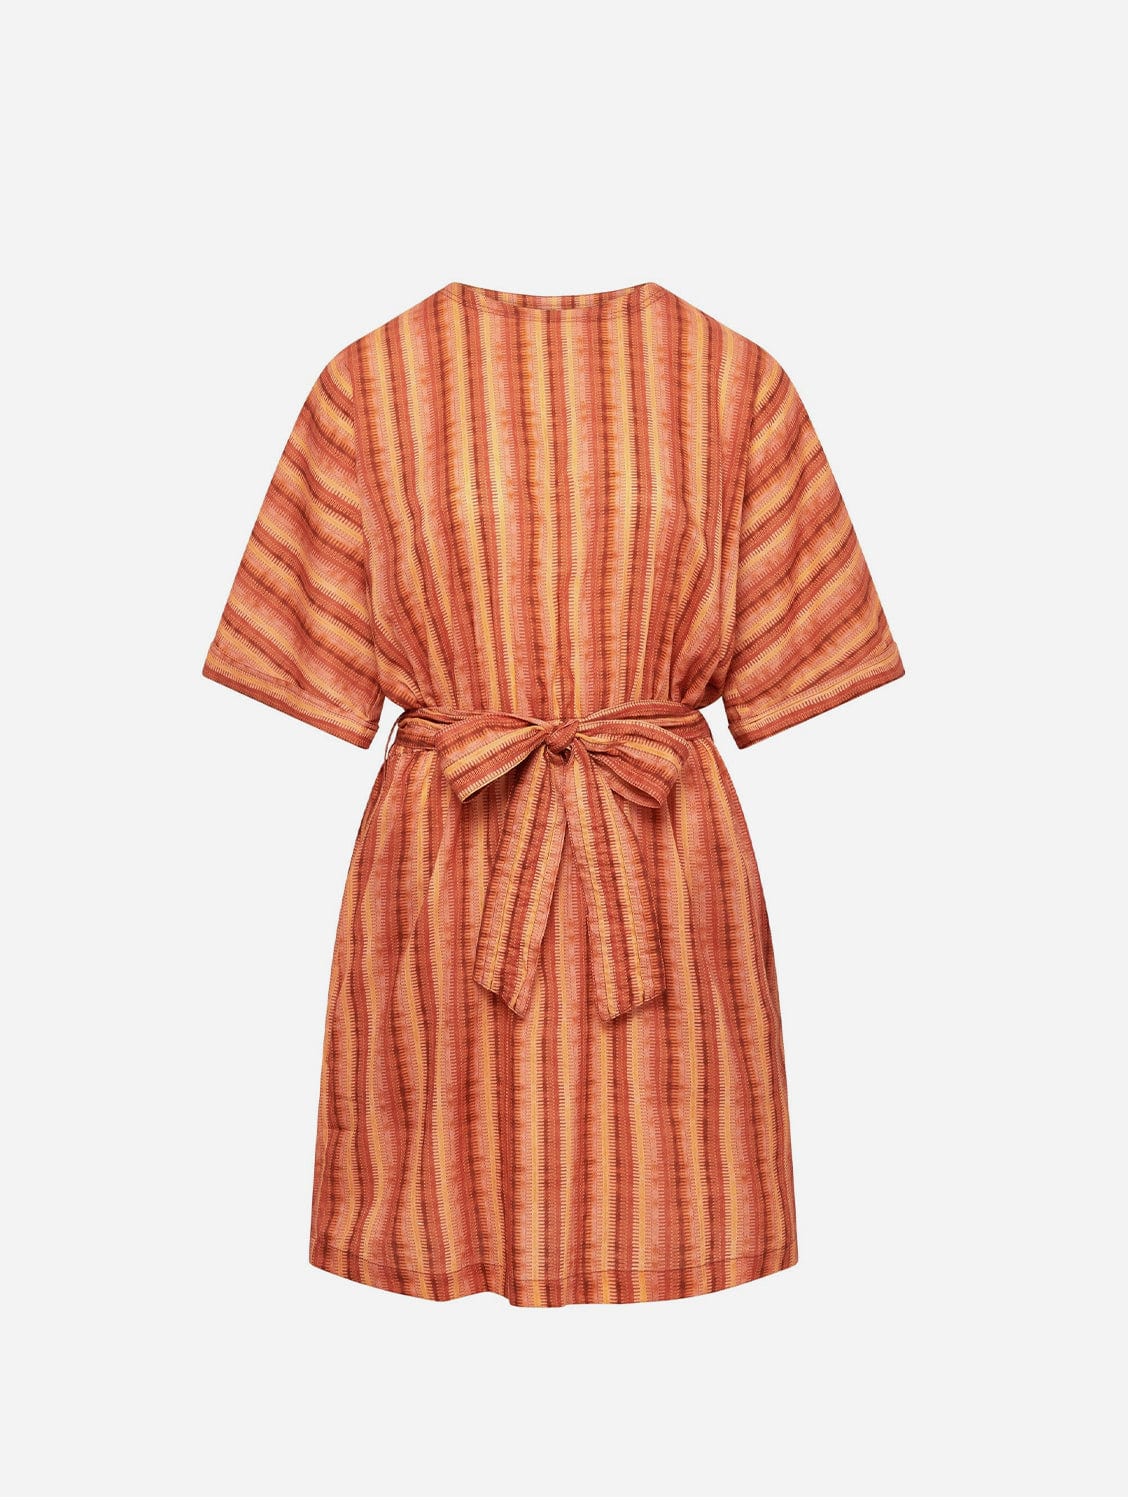 KOMODO AZUL - Organic Cotton Weave Stripe Dress Pink SIZE 1 / UK 8 / EUR 36